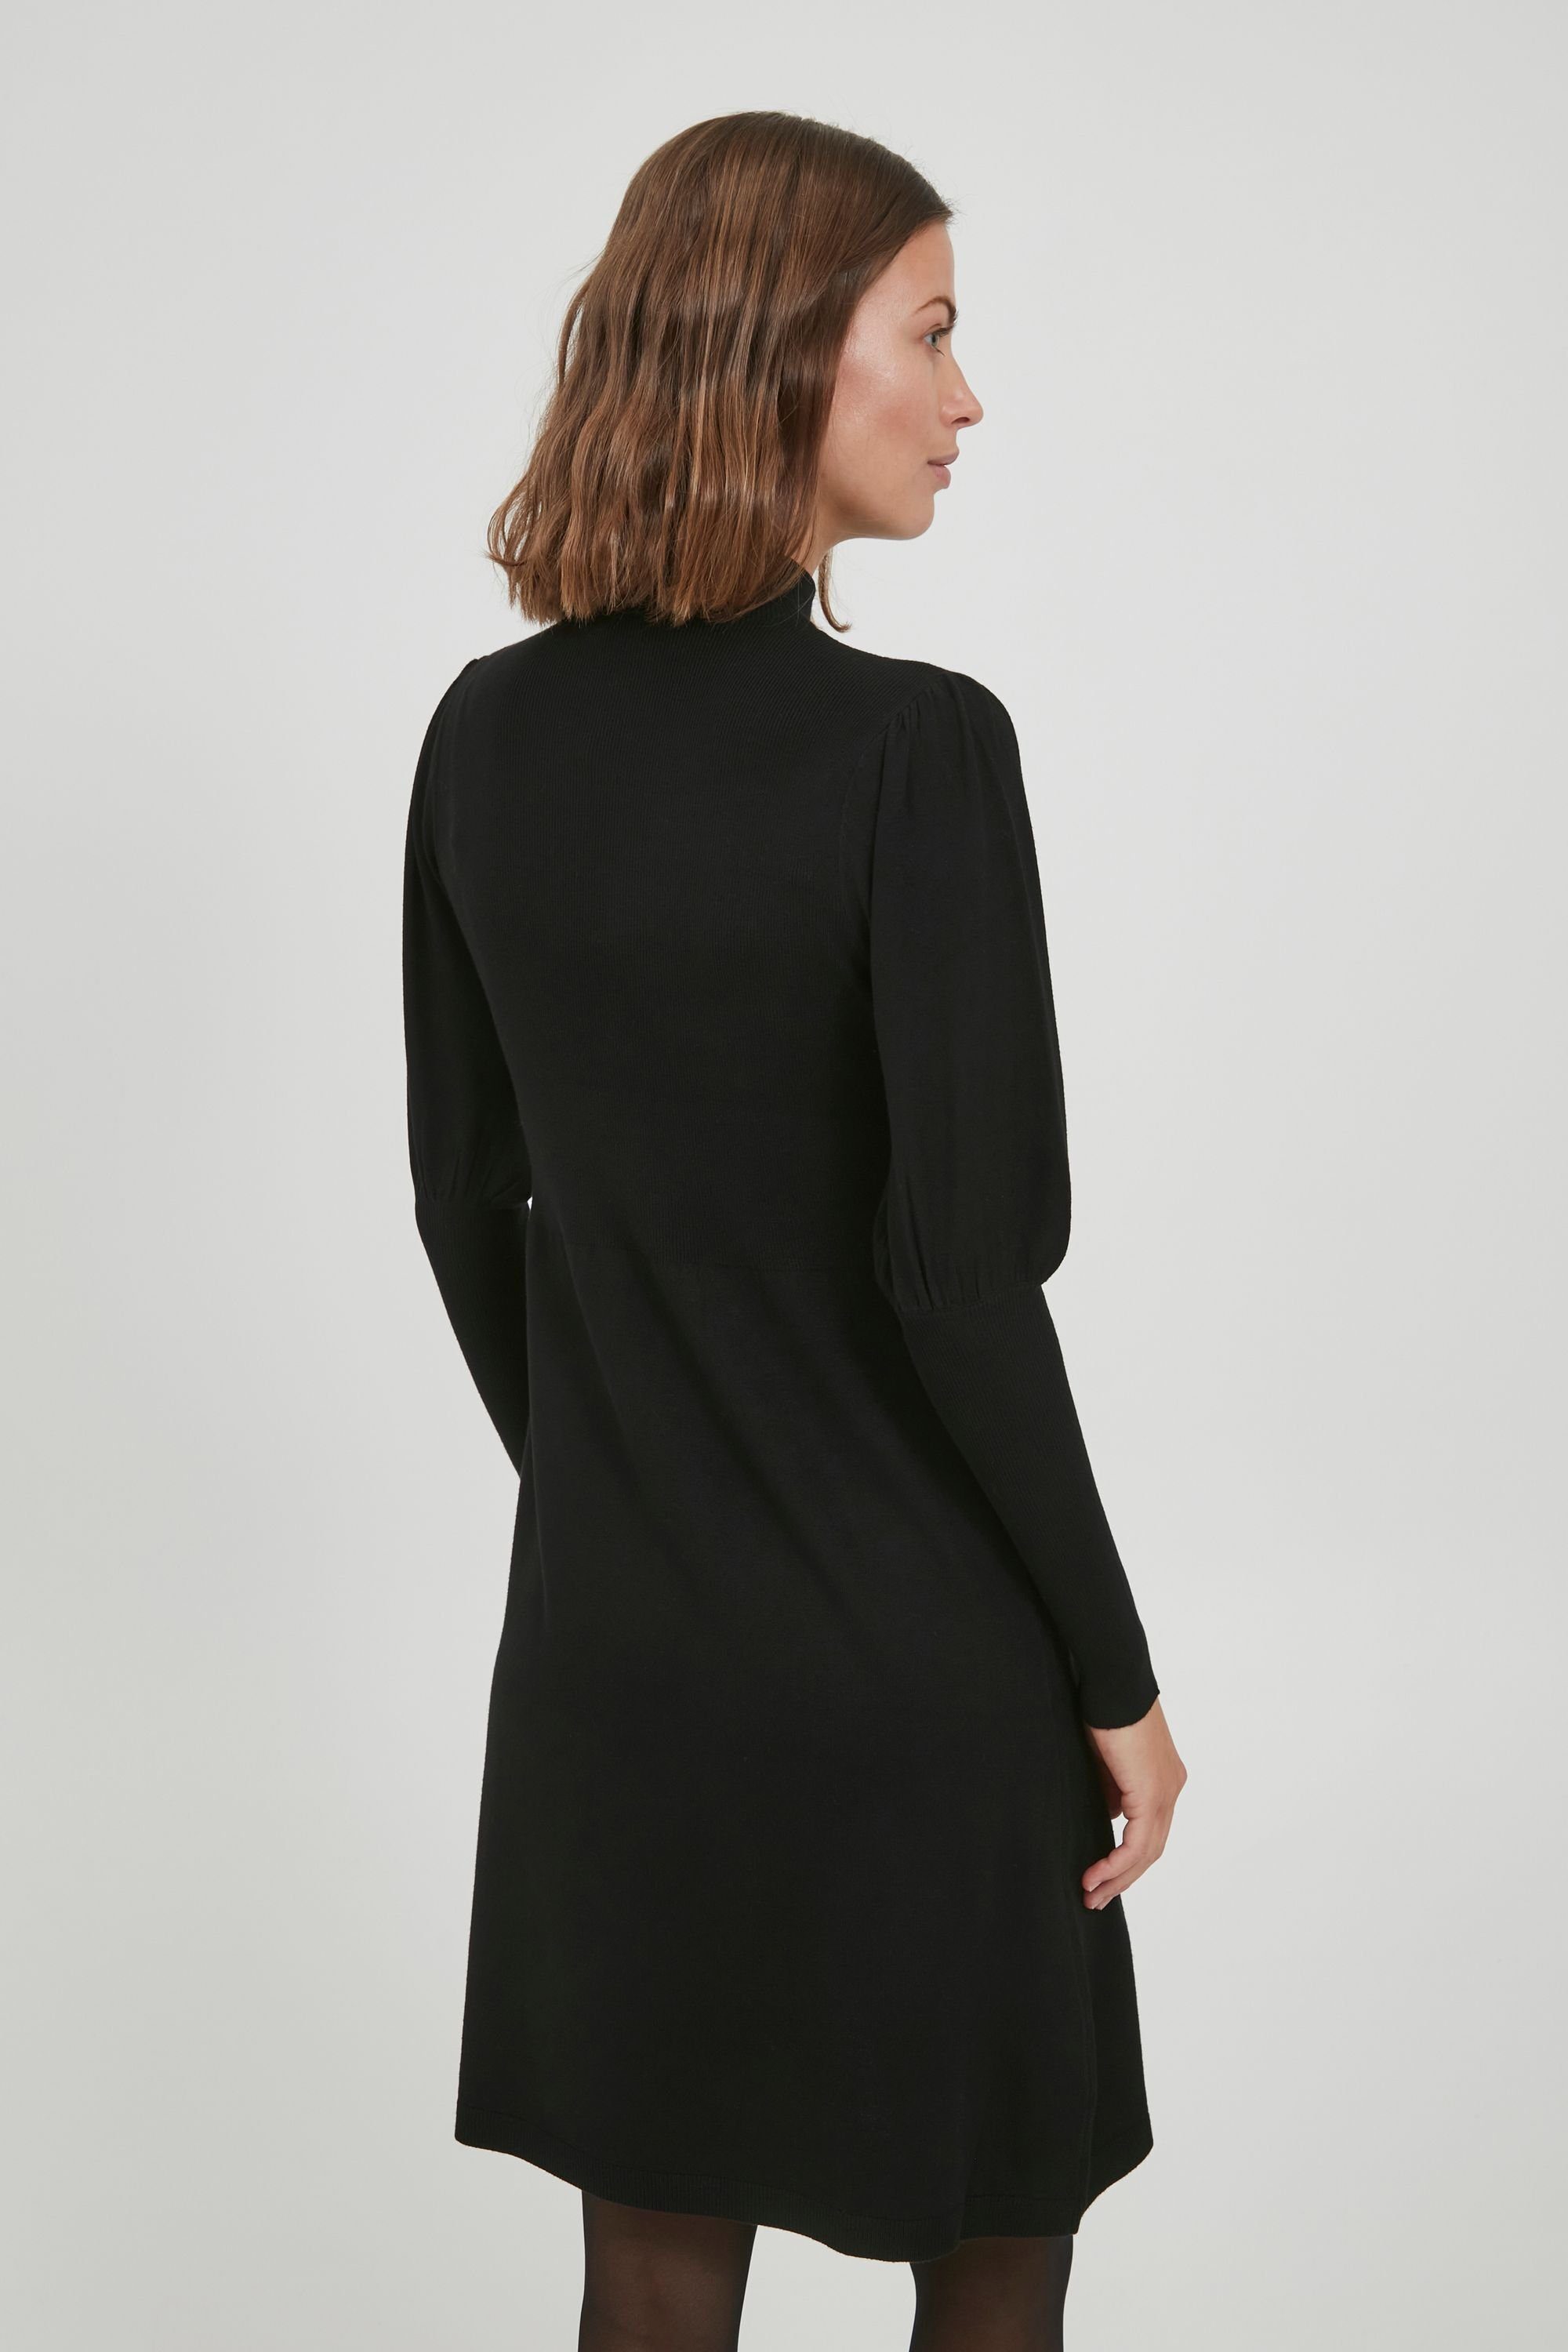 Black Dress fransa 4 FRDEDINA 20610155 Fransa - Strickkleid